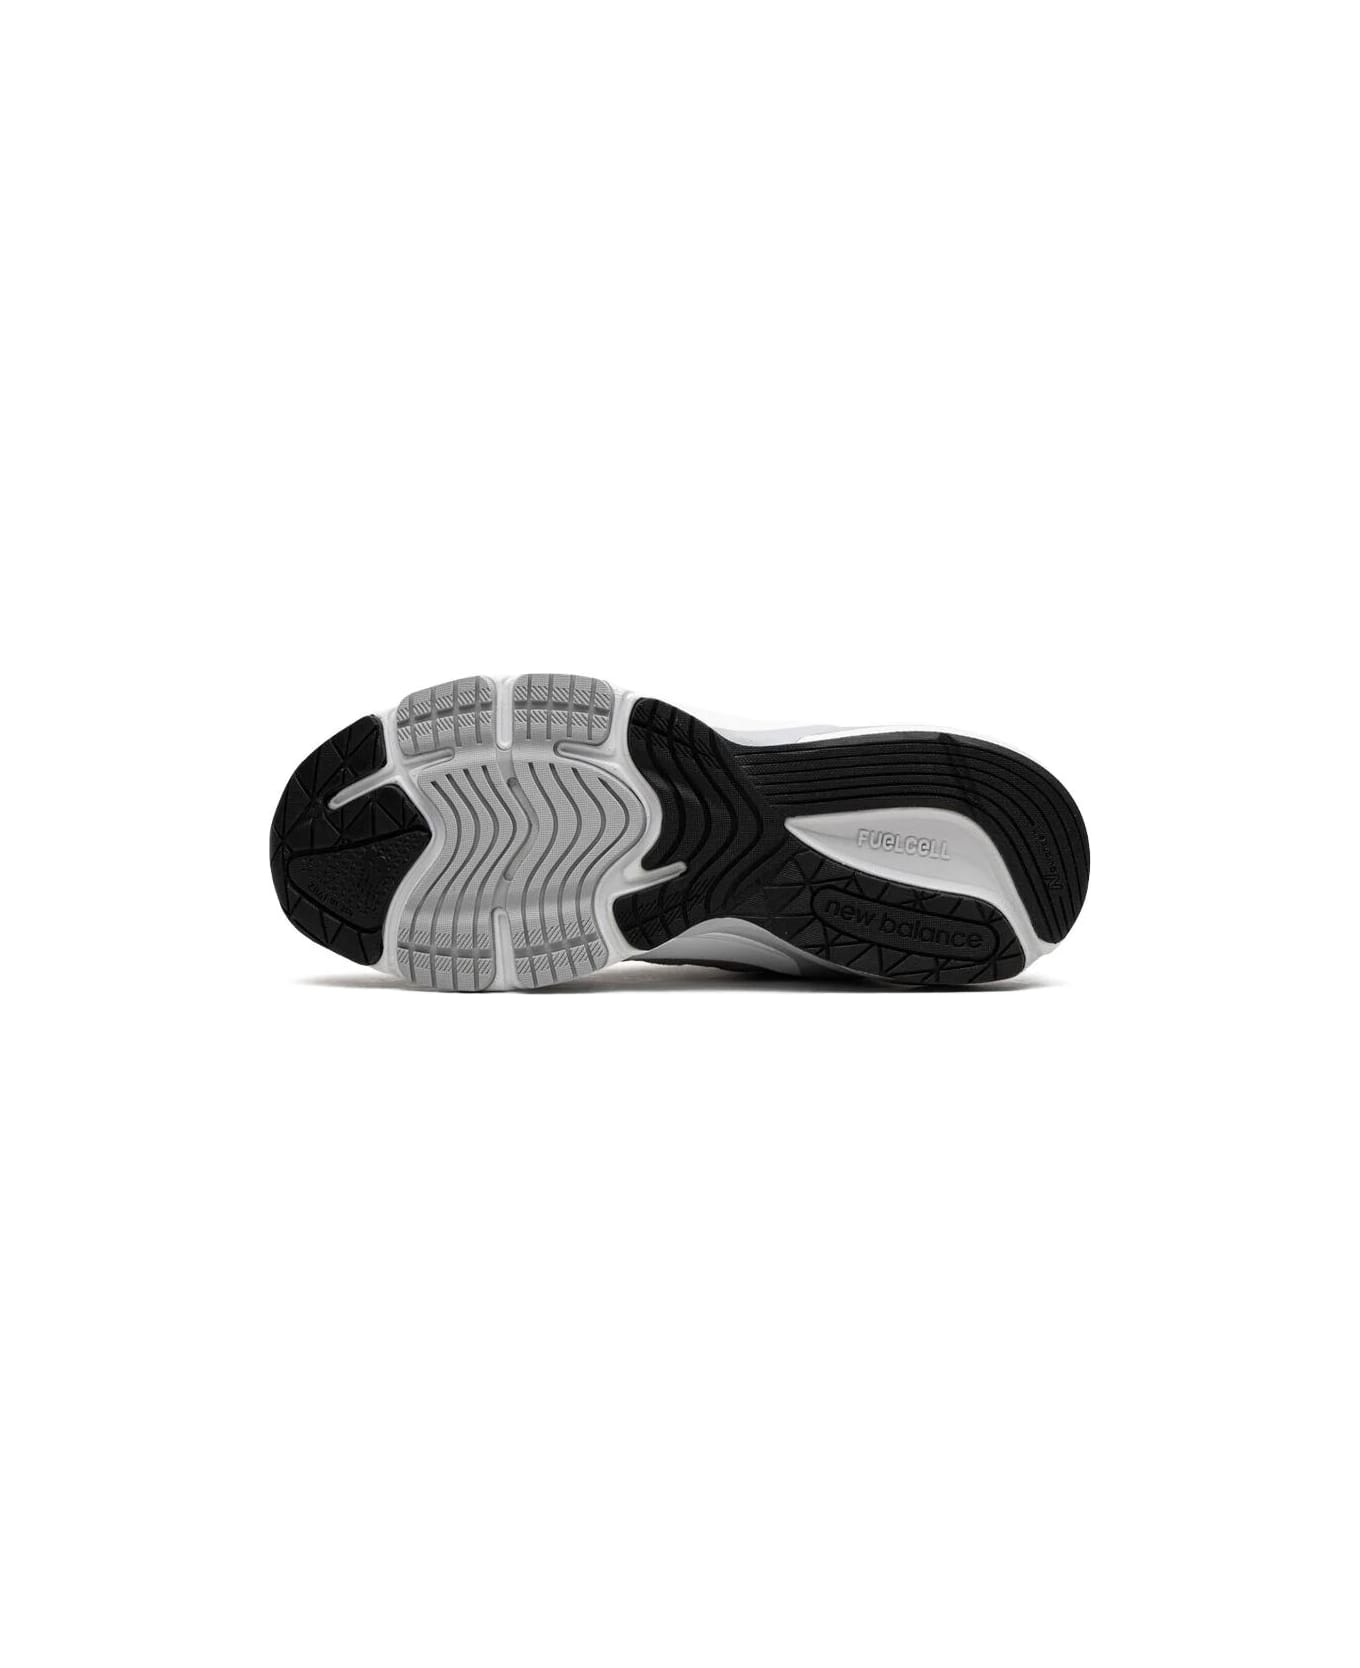 New Balance 990v6 Sneakers - Cool Grey スニーカー